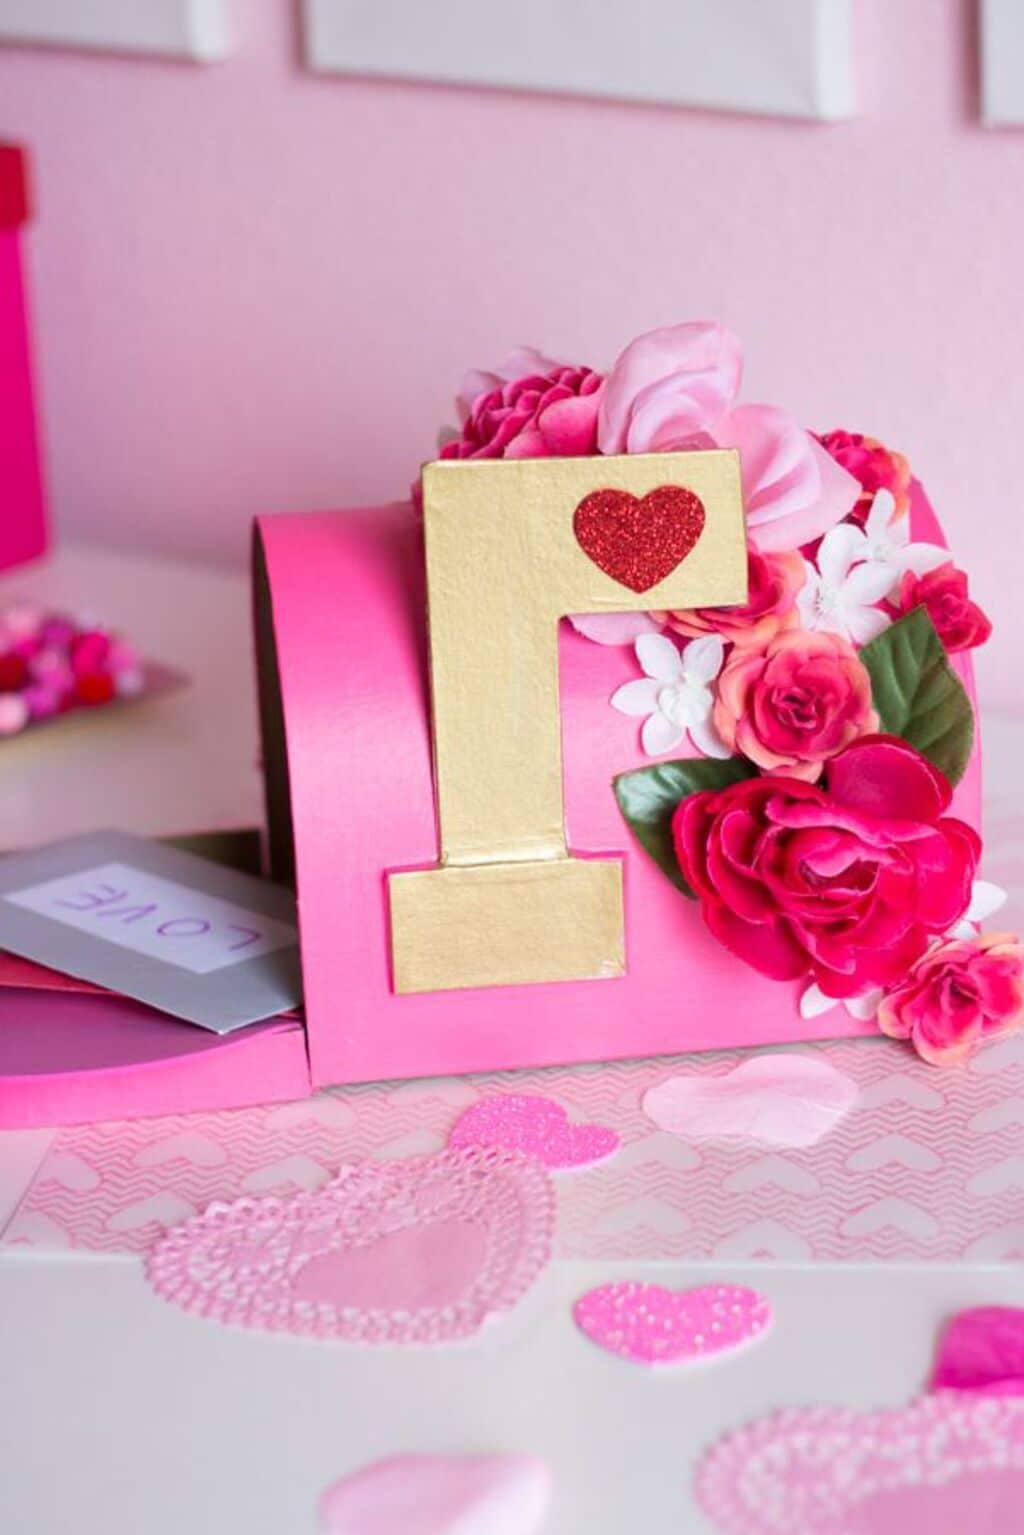 DIY valentine box ideas